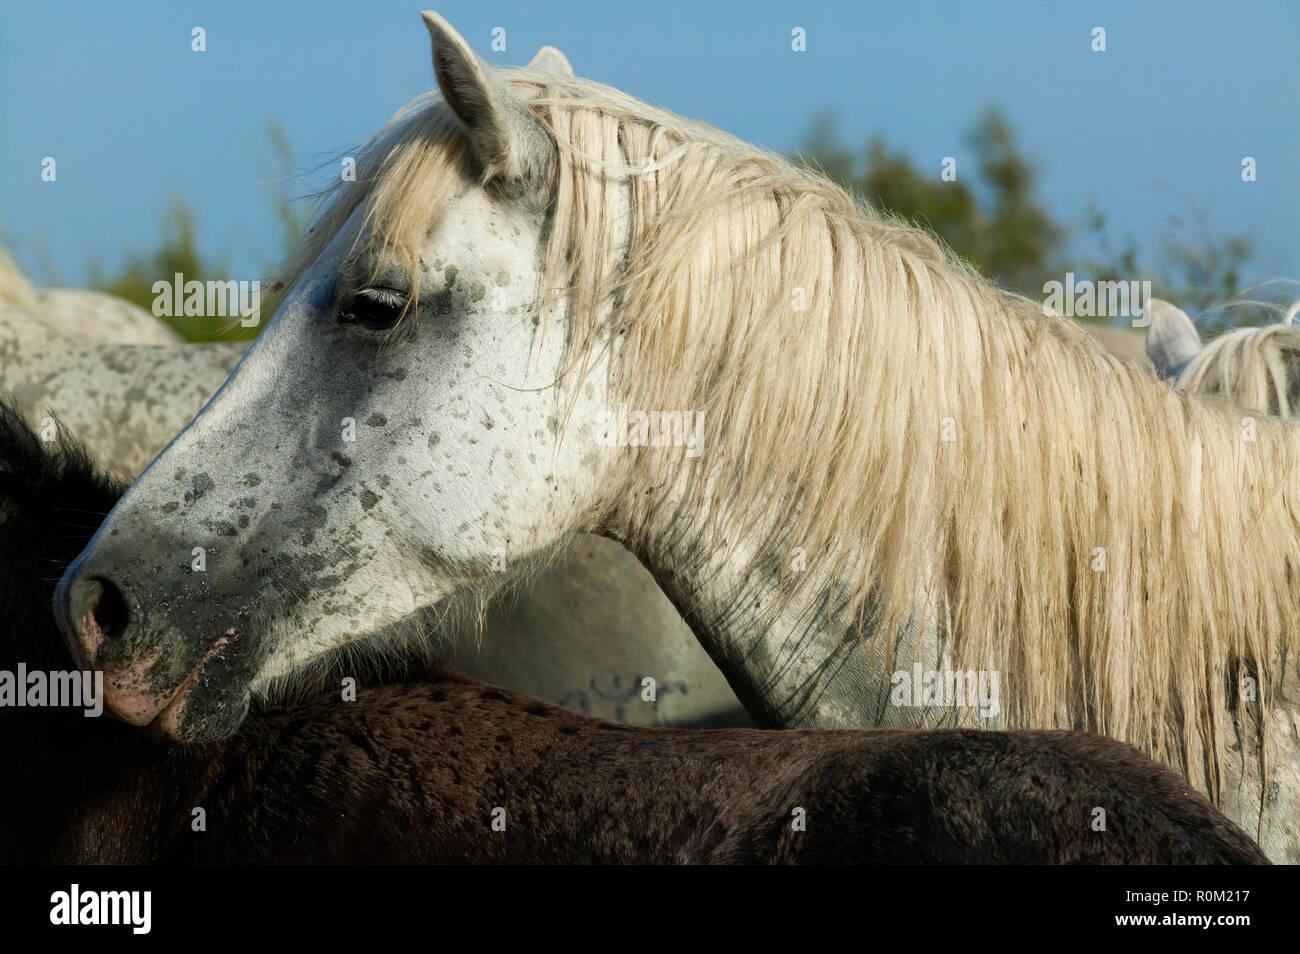 White camargue horses, Saintes Maries de la Mer, France Stock Photo